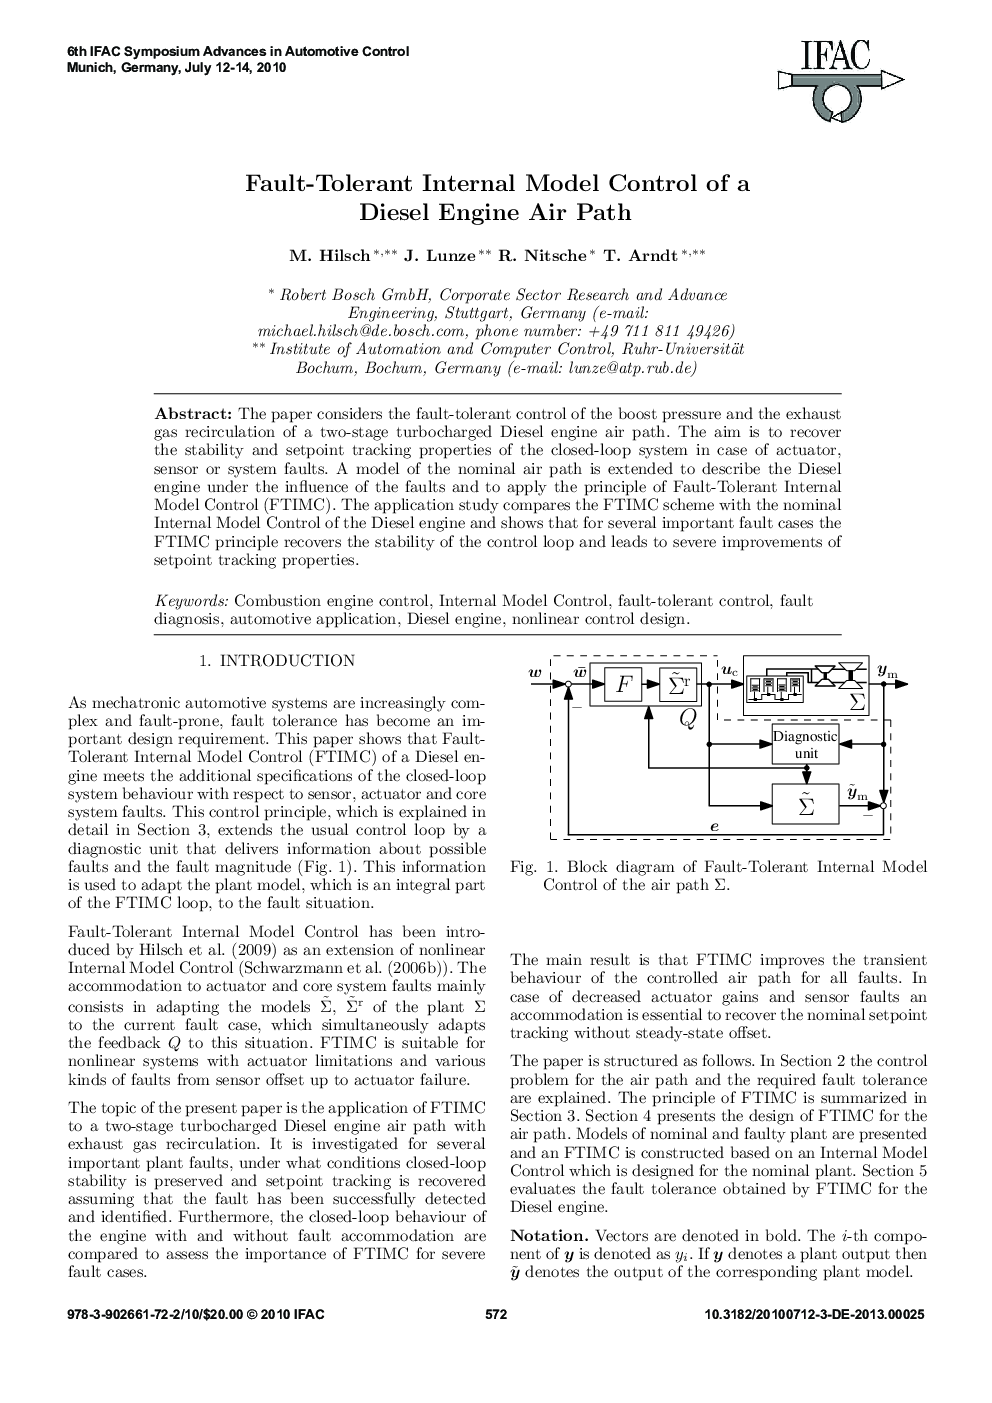 Fault-Tolerant Internal Model Control of a Diesel Engine Air Path